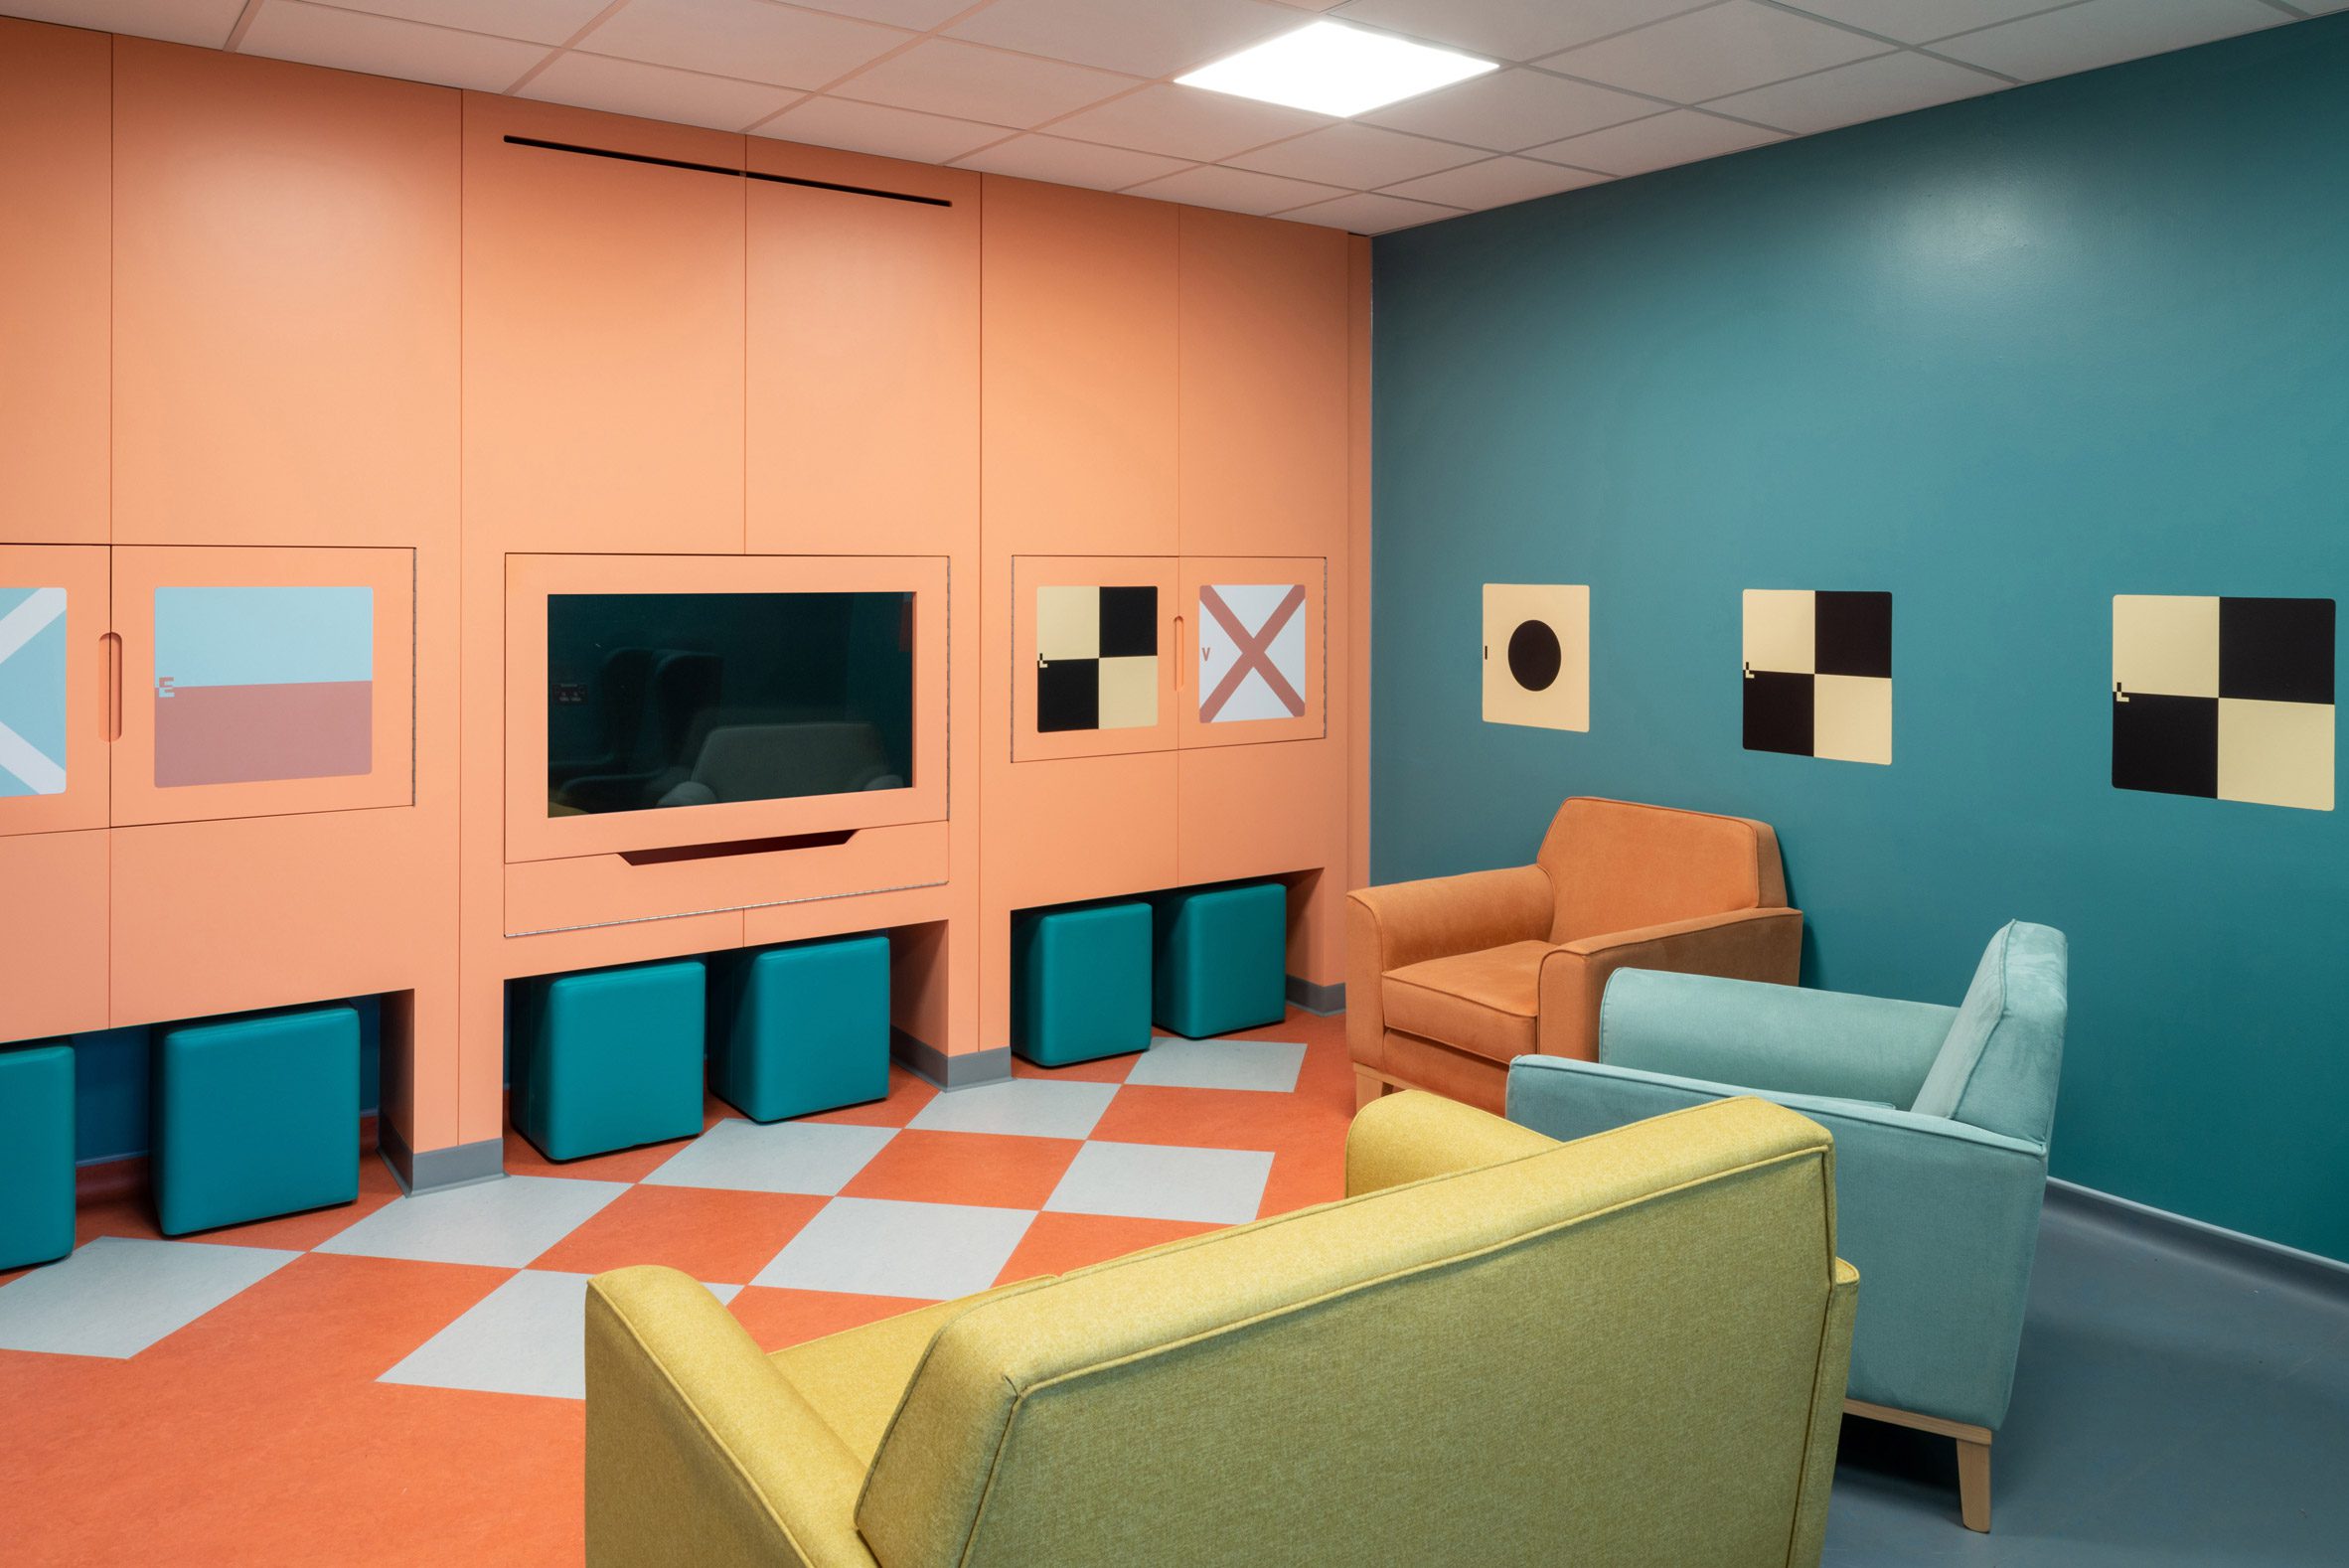 Quiet zone in communal lounge at CAMHS Edinburgh mental health unit